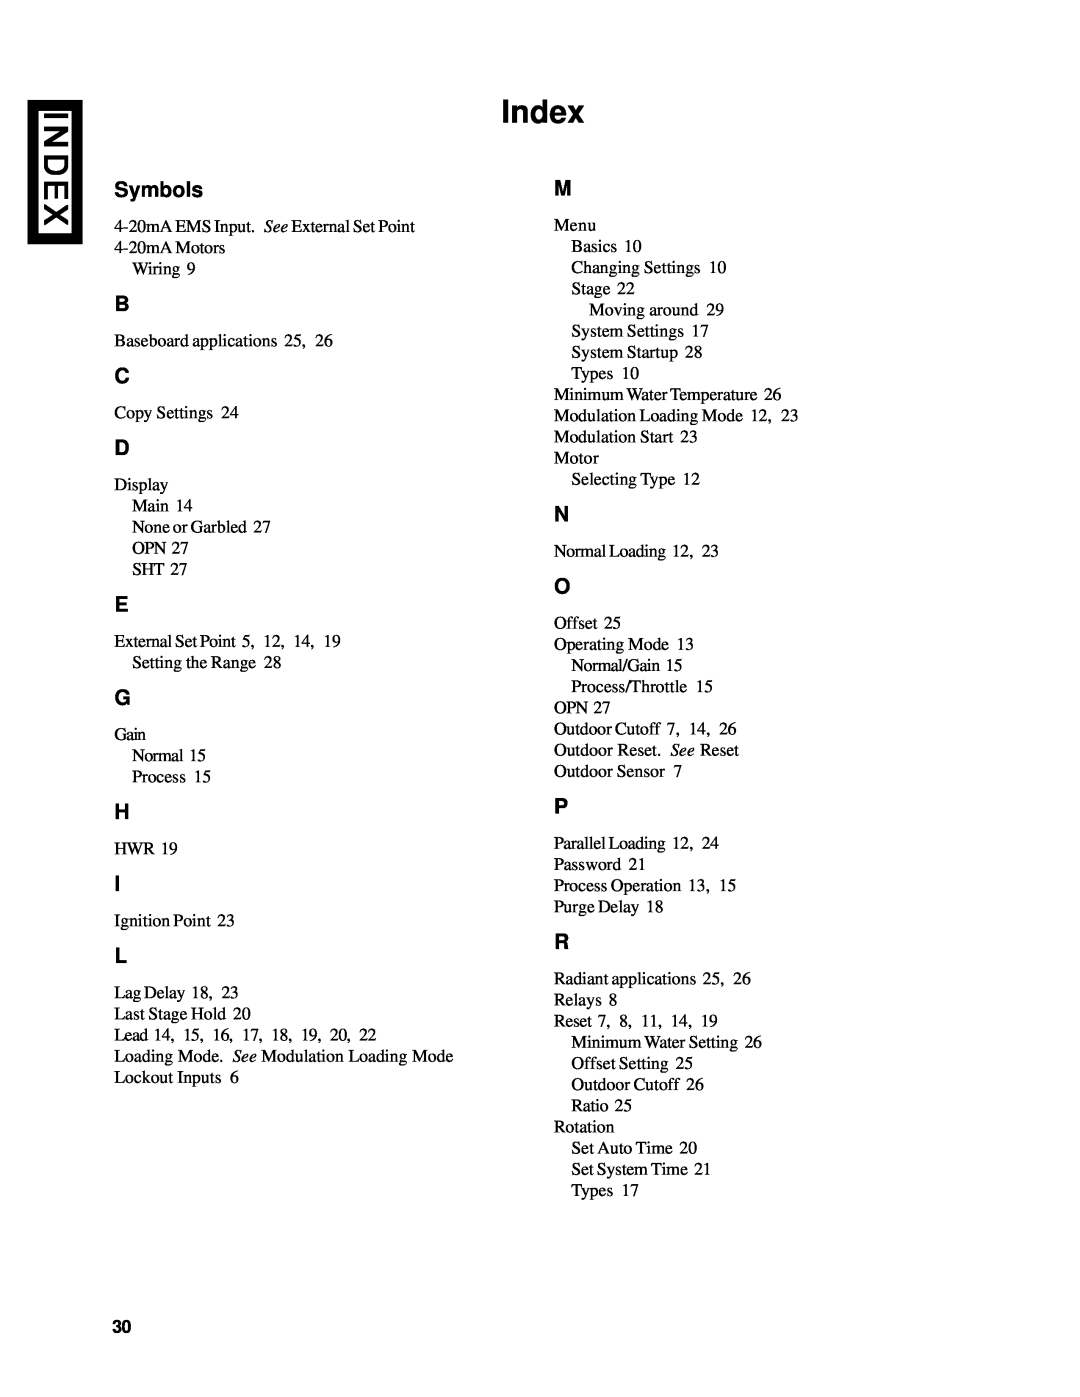 Lochinvar Harmony operation manual Index, Symbols 